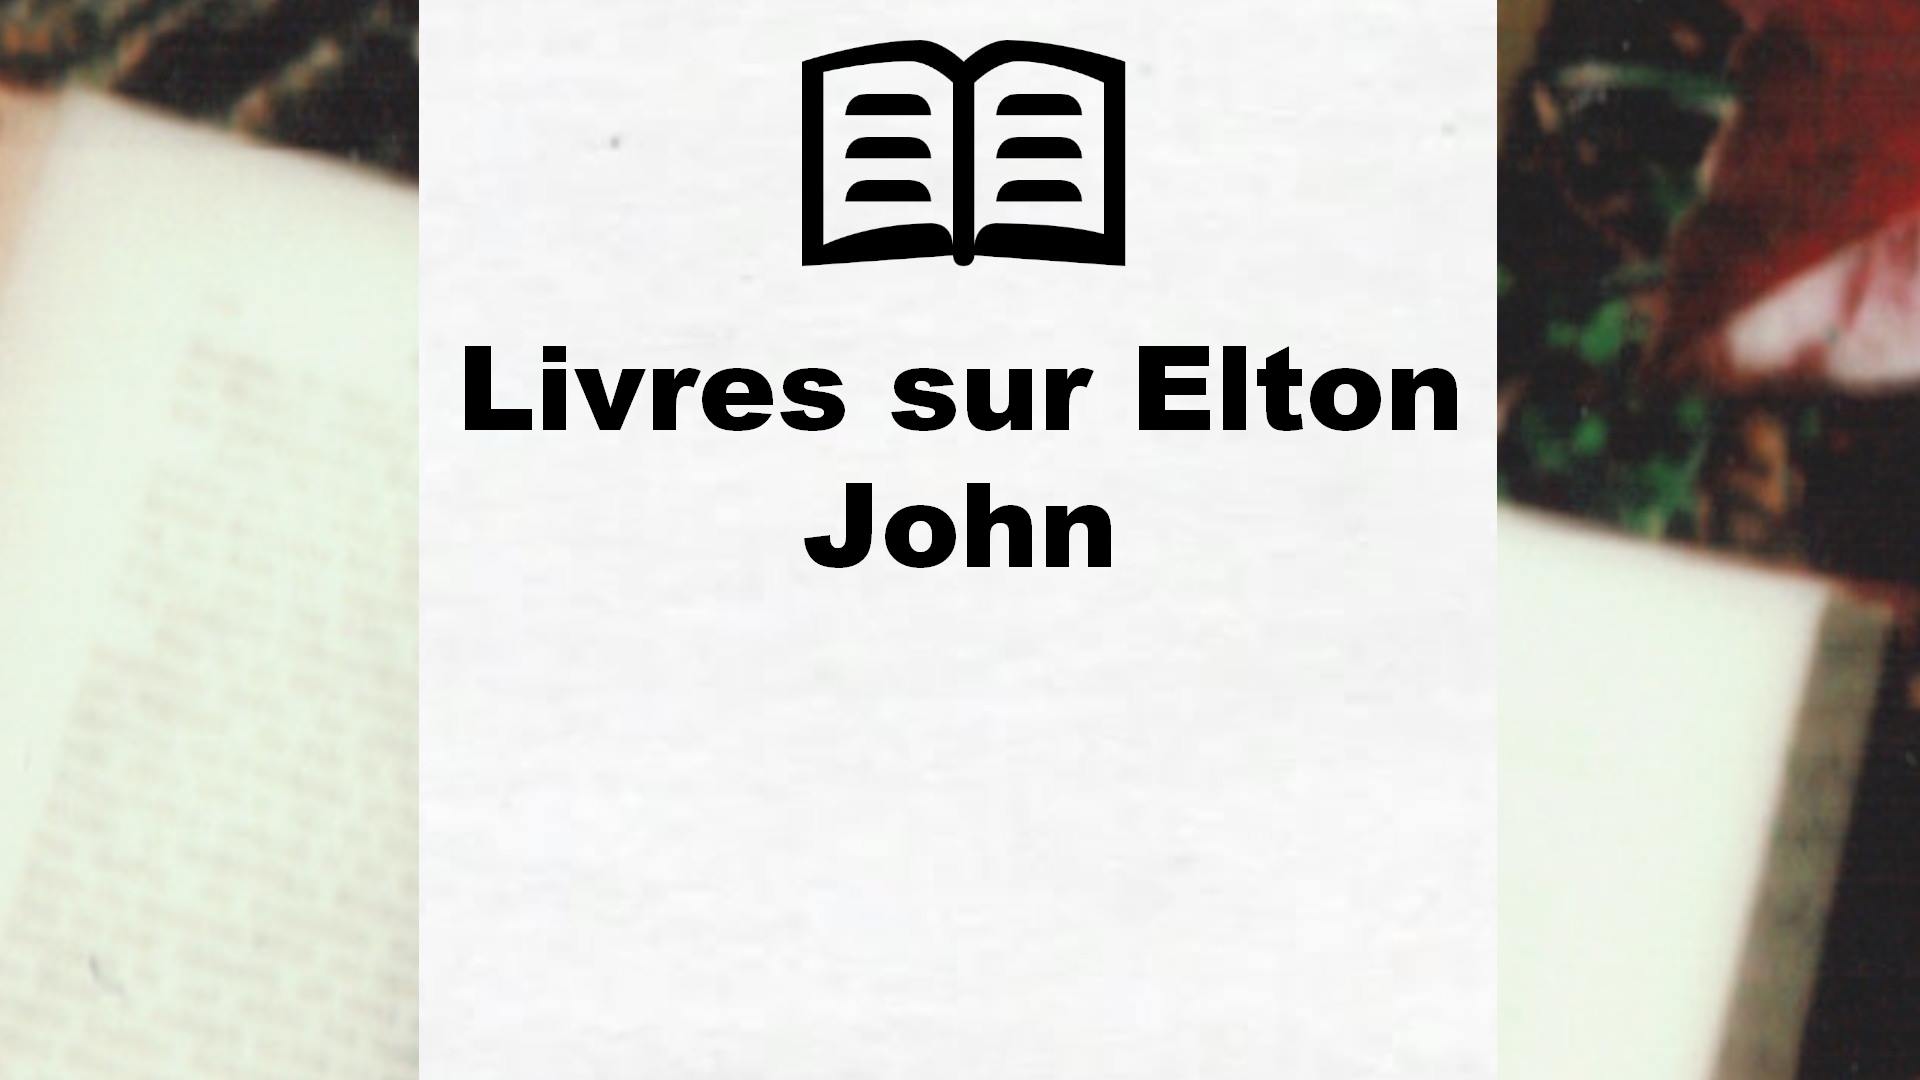 Livres sur Elton John